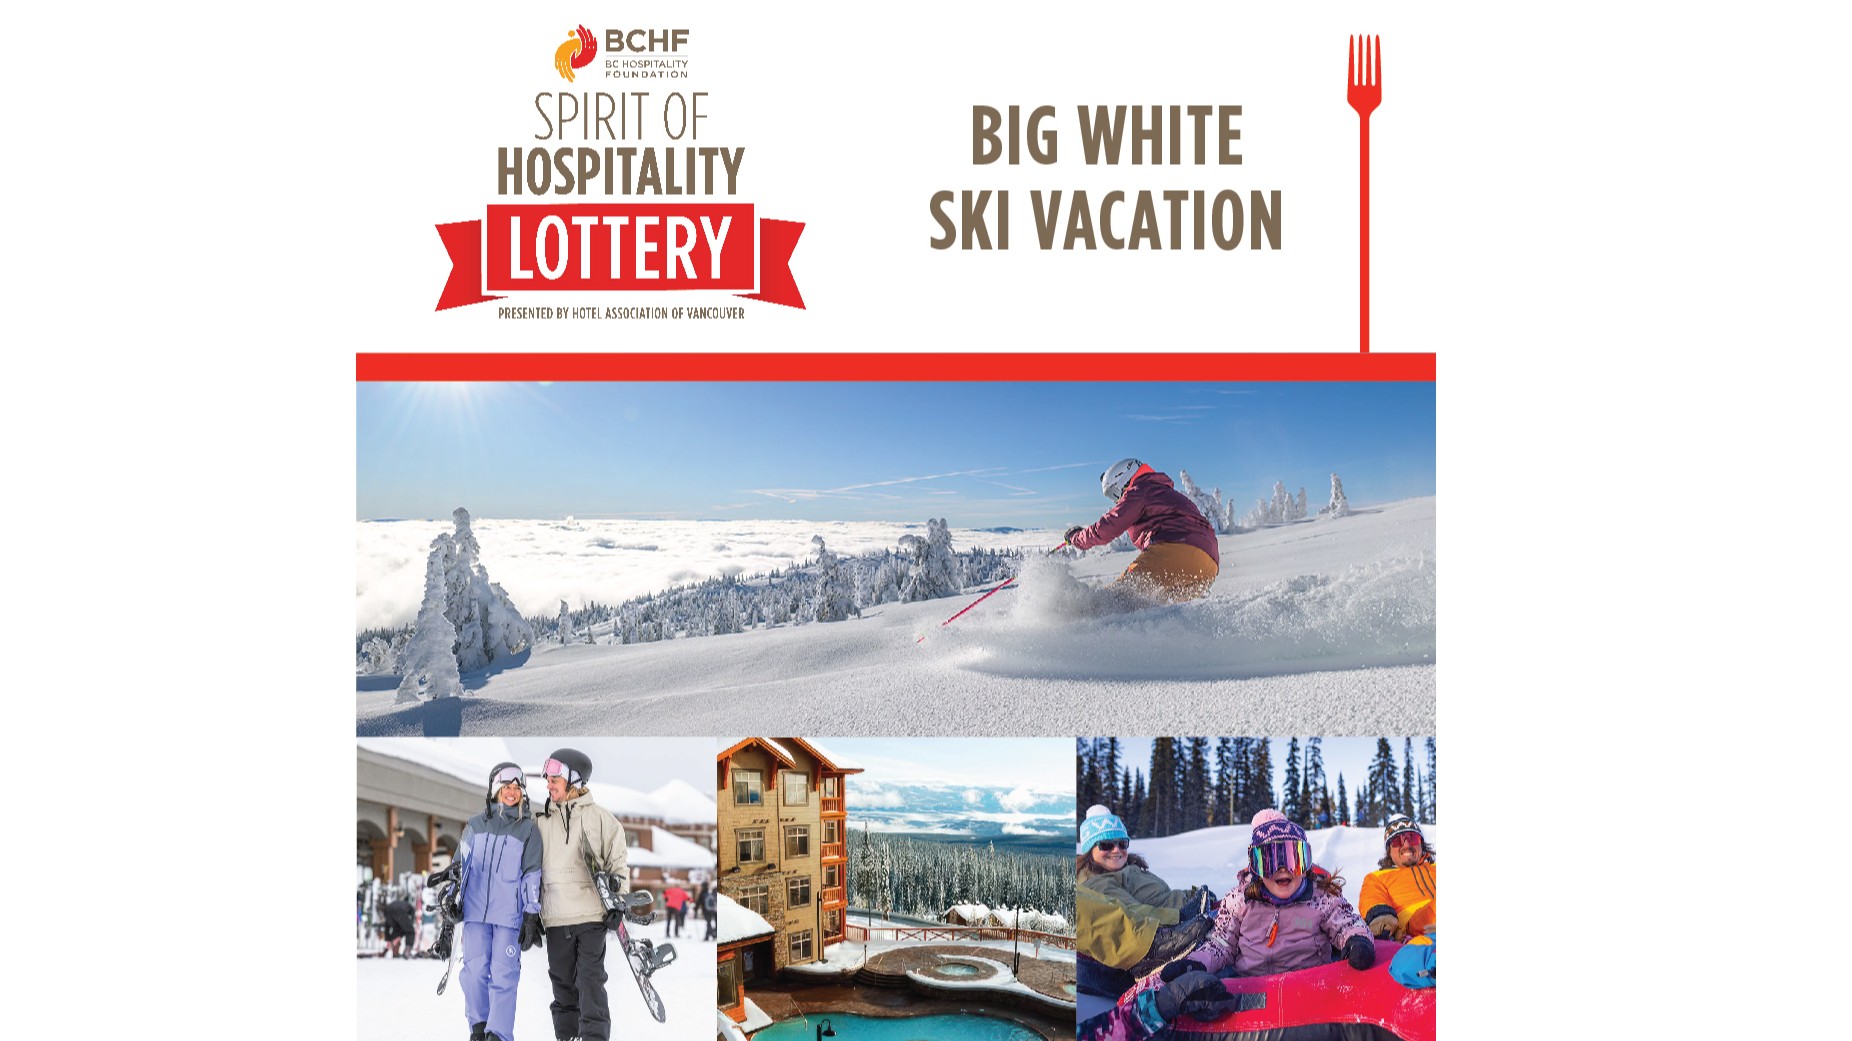 Big White Ski Vacation